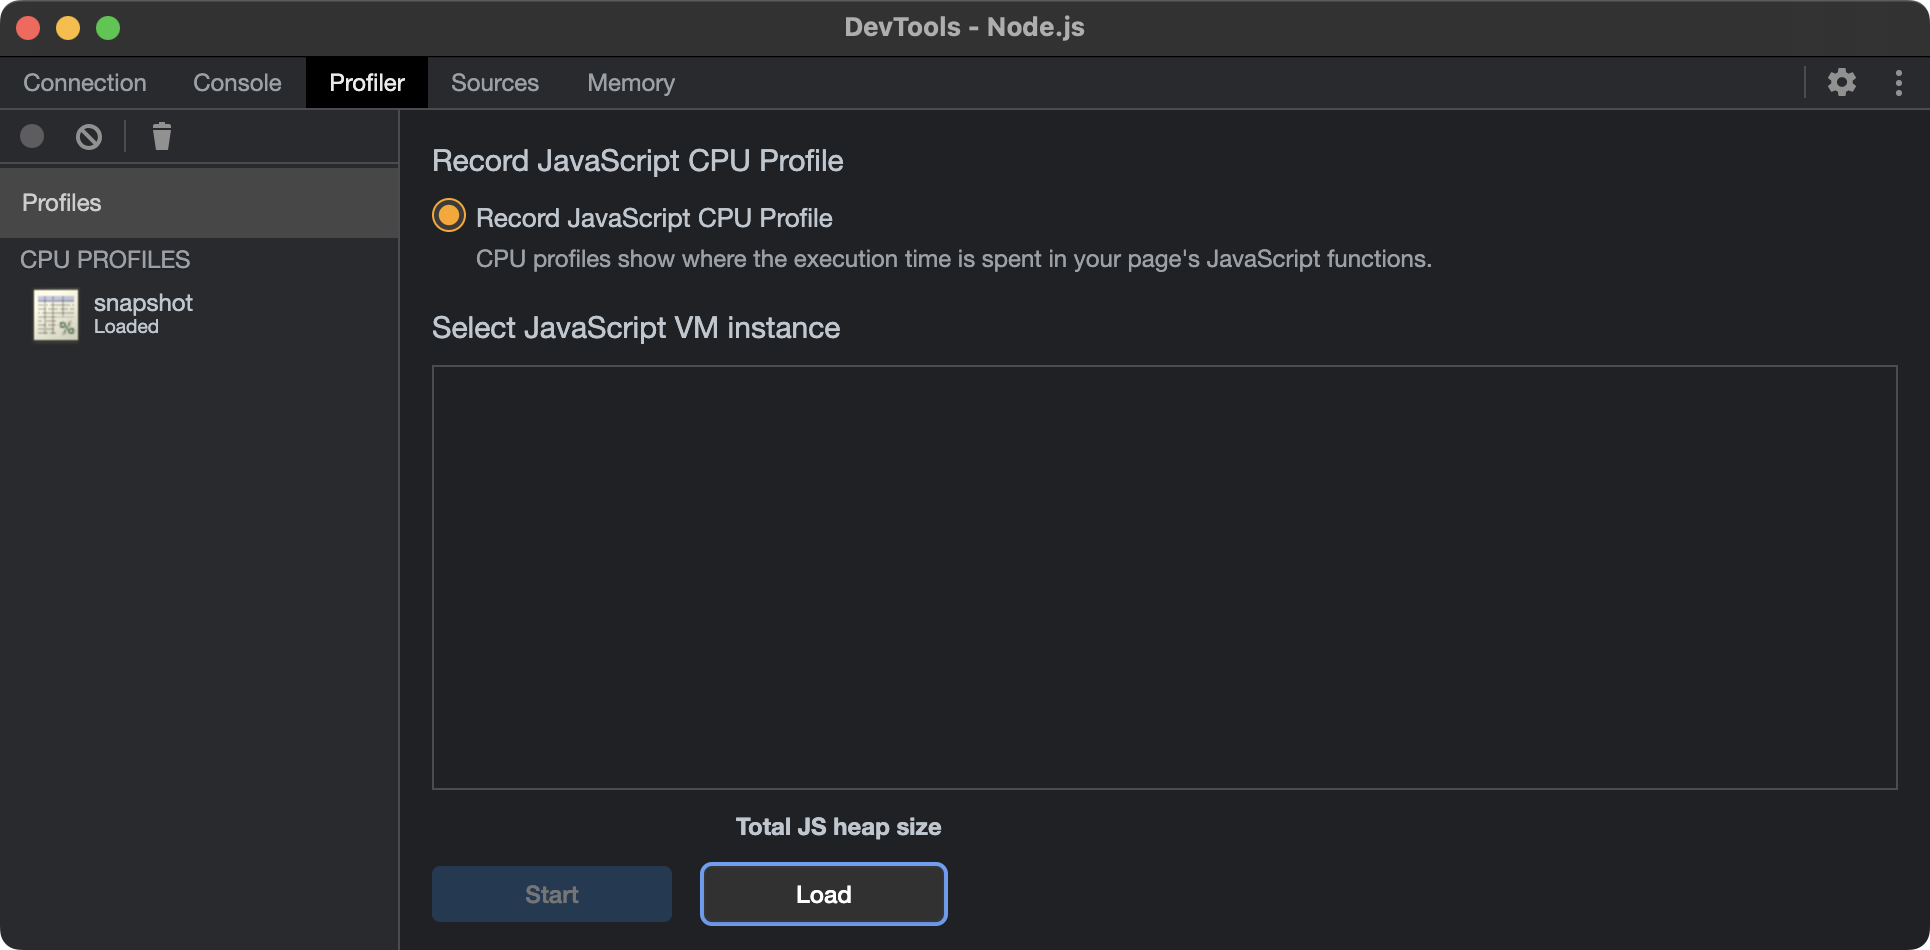 DevTools Profiler - CPU snapshot loaded